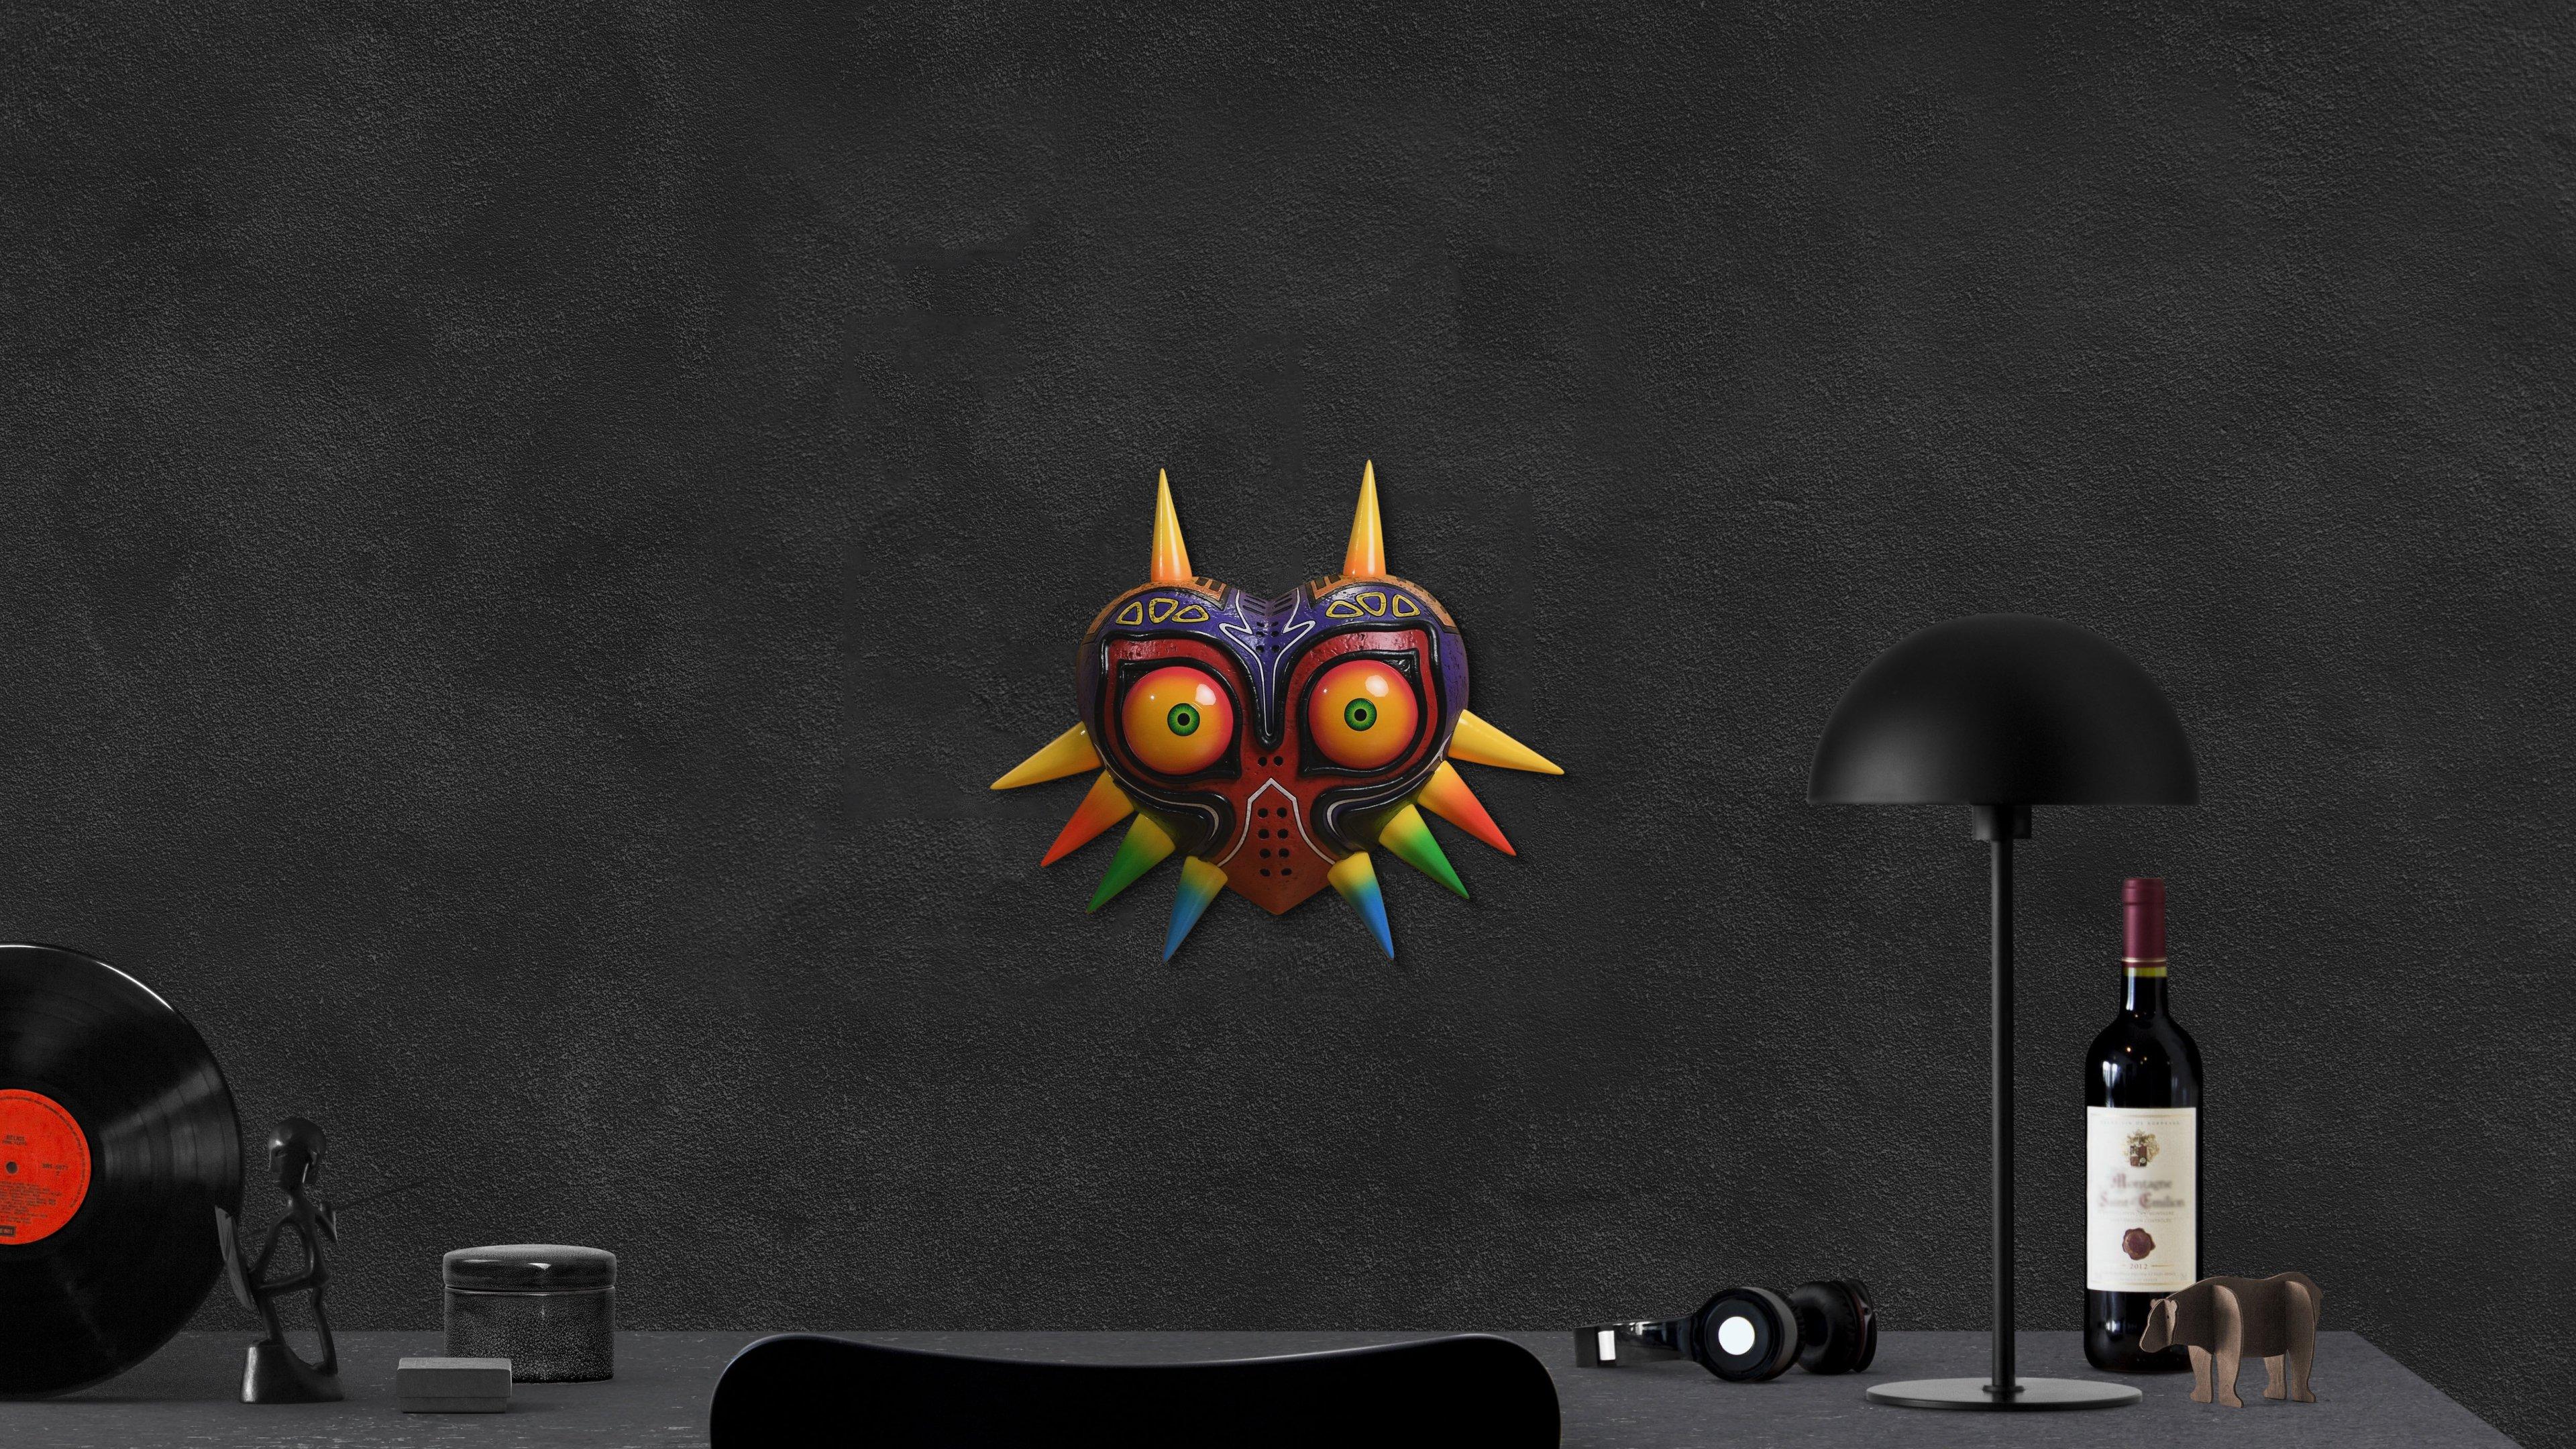 The Legend of Zelda Majora's Mask PVC Statue: Majora's Mask